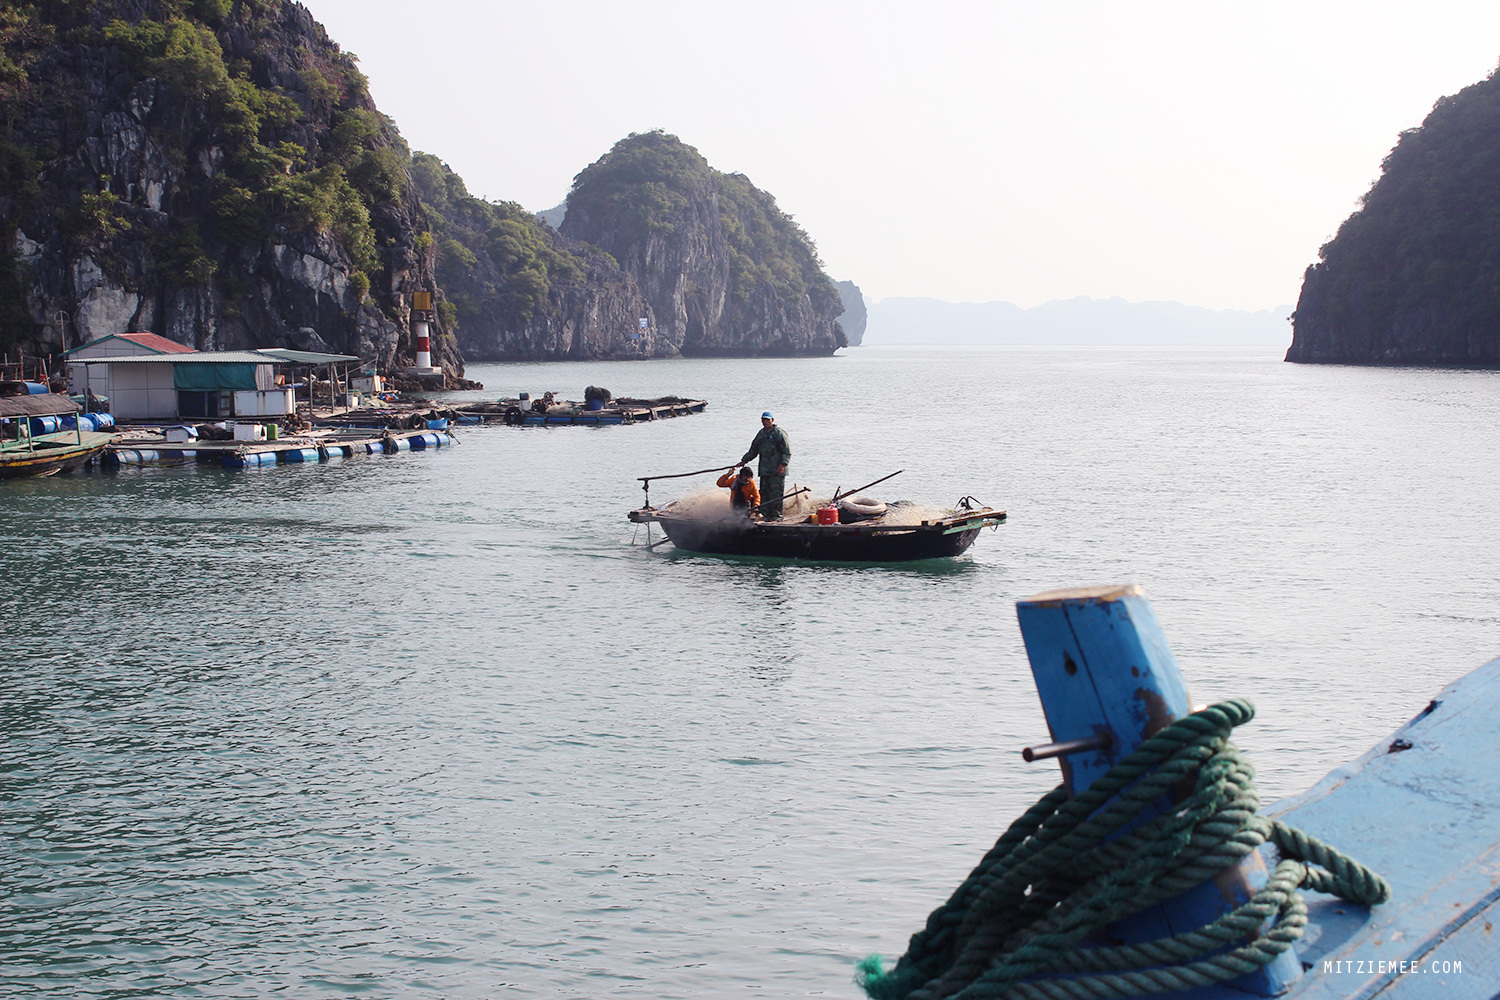 Floating village, Lan Ha Bay, Vietnam